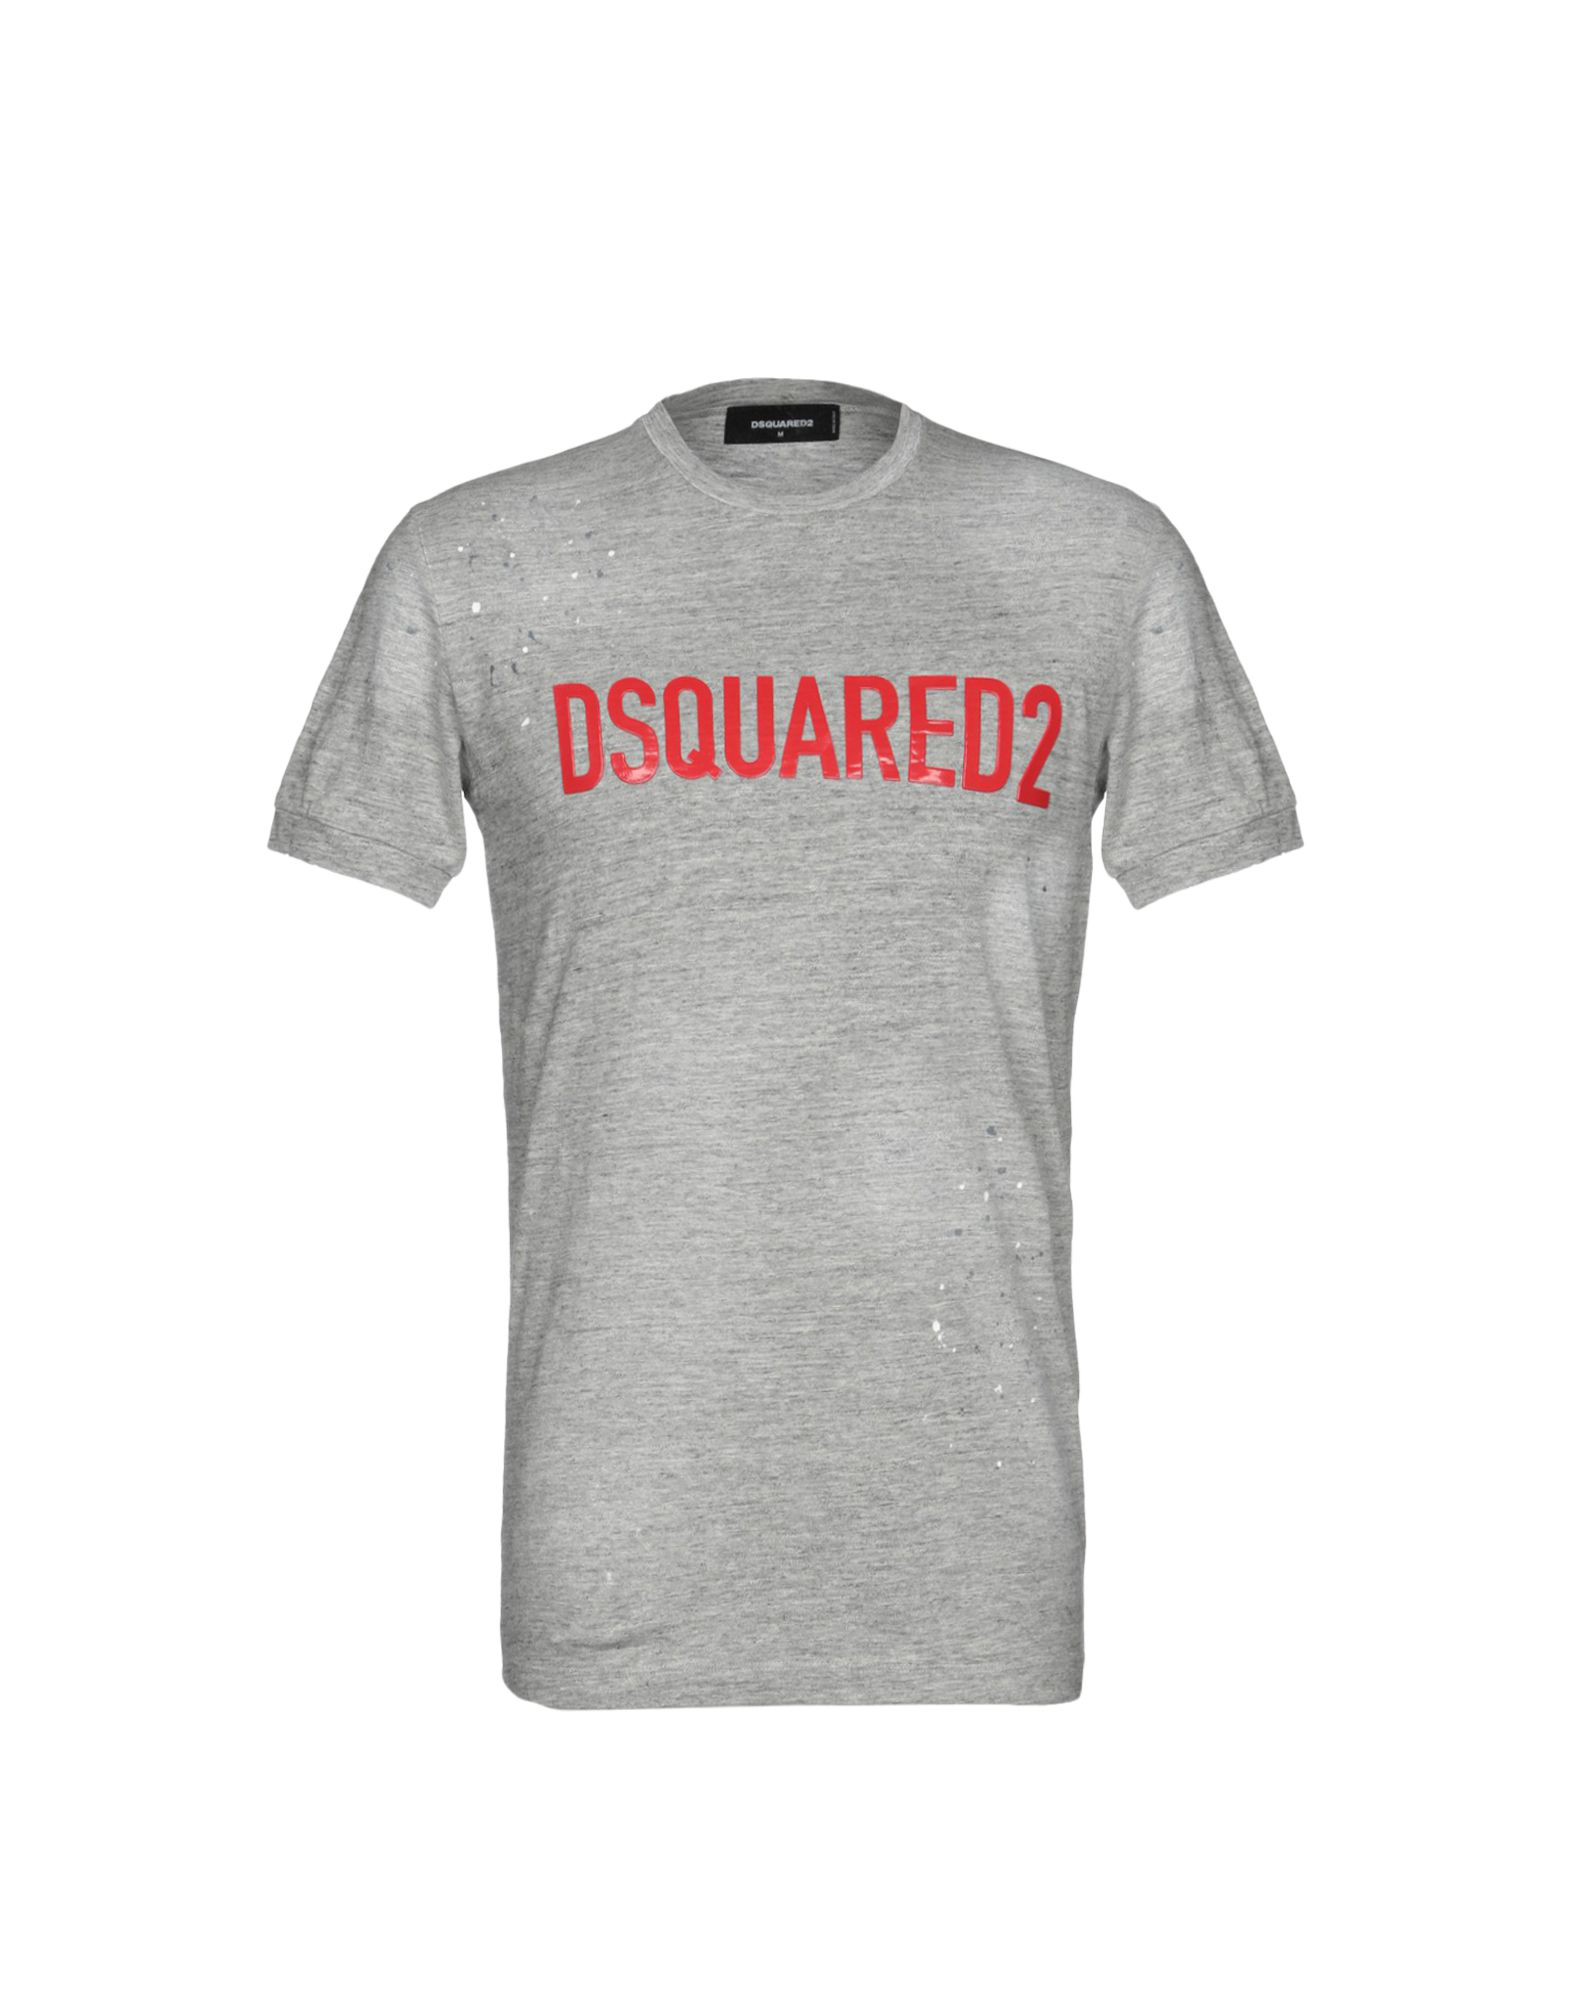 dsquared t shirt 2019